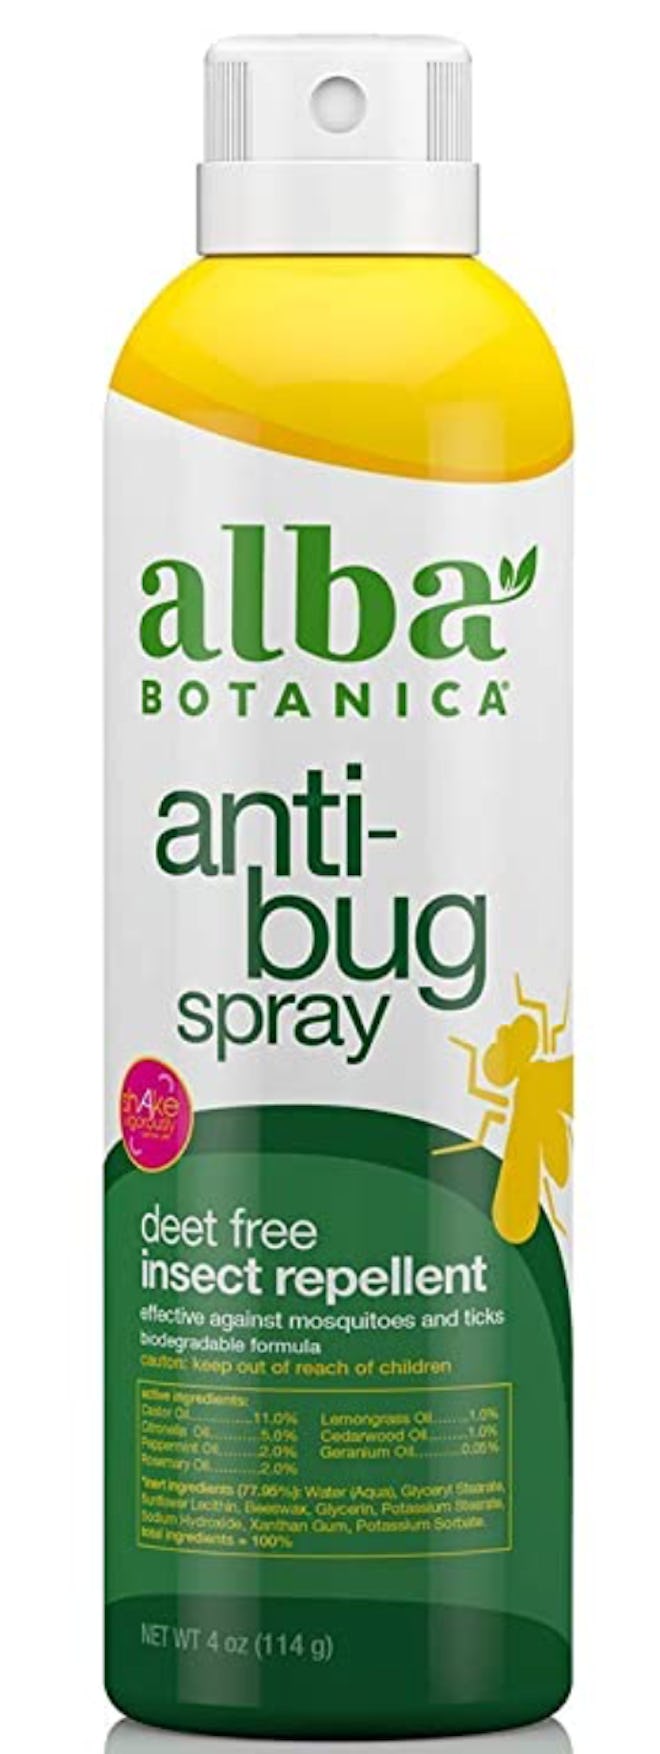 Alba Botanica Anti-Bug Spray, Deet Free Insect Repellent